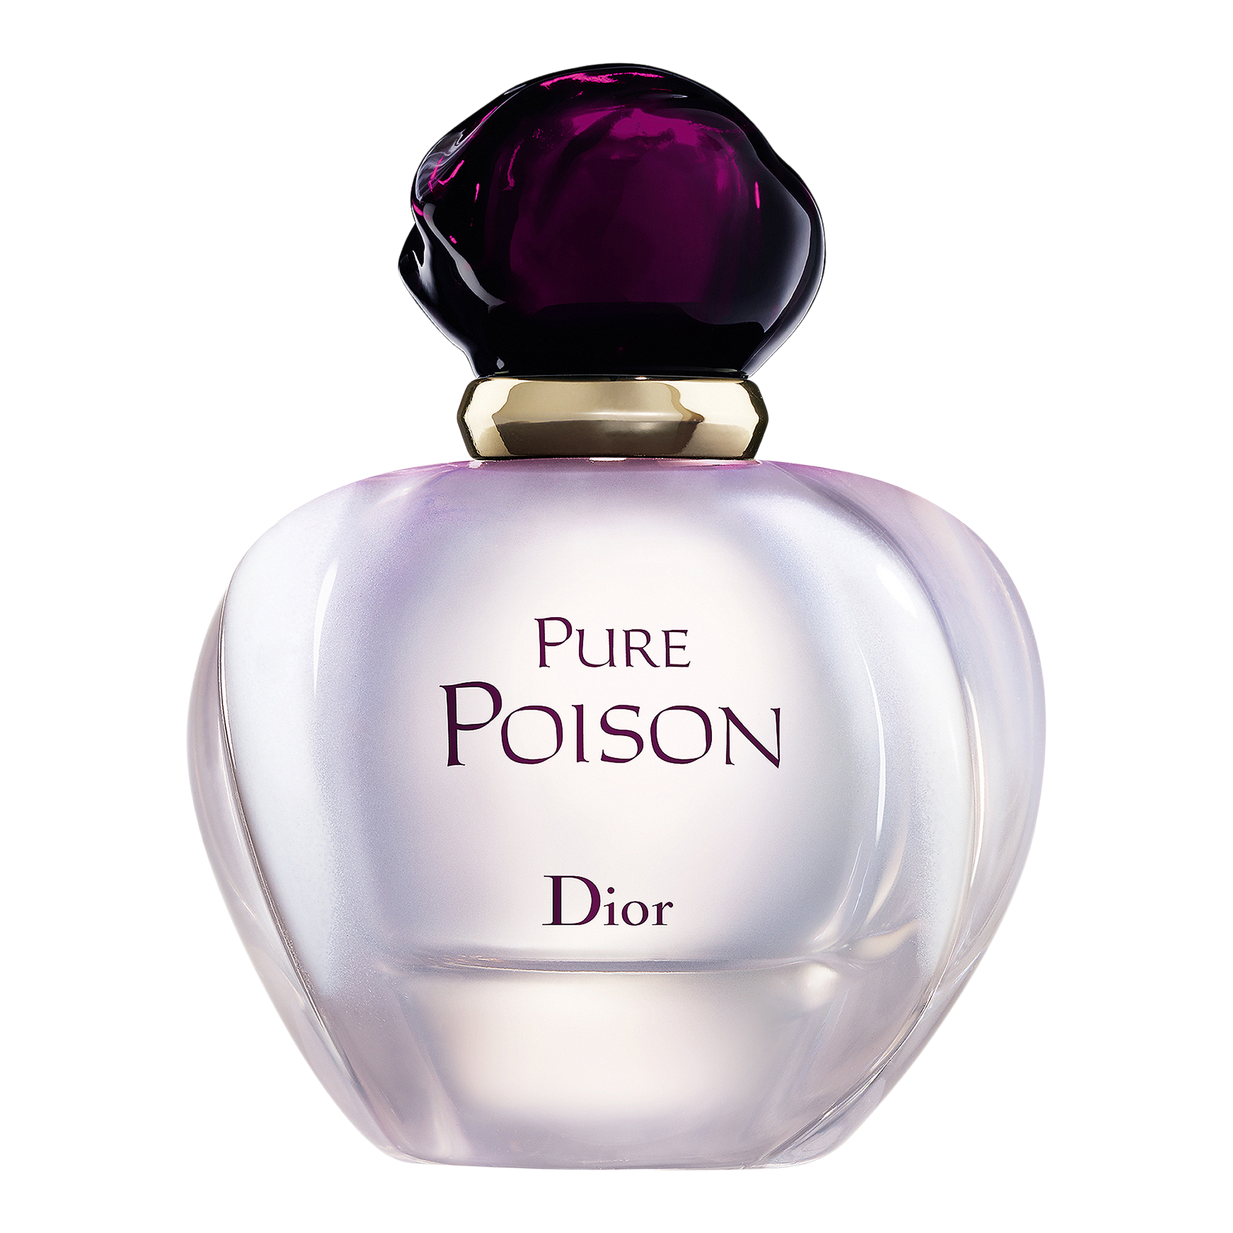 Poison Girl by Christian Dior 1 oz Eau de Toilette Spray / Women